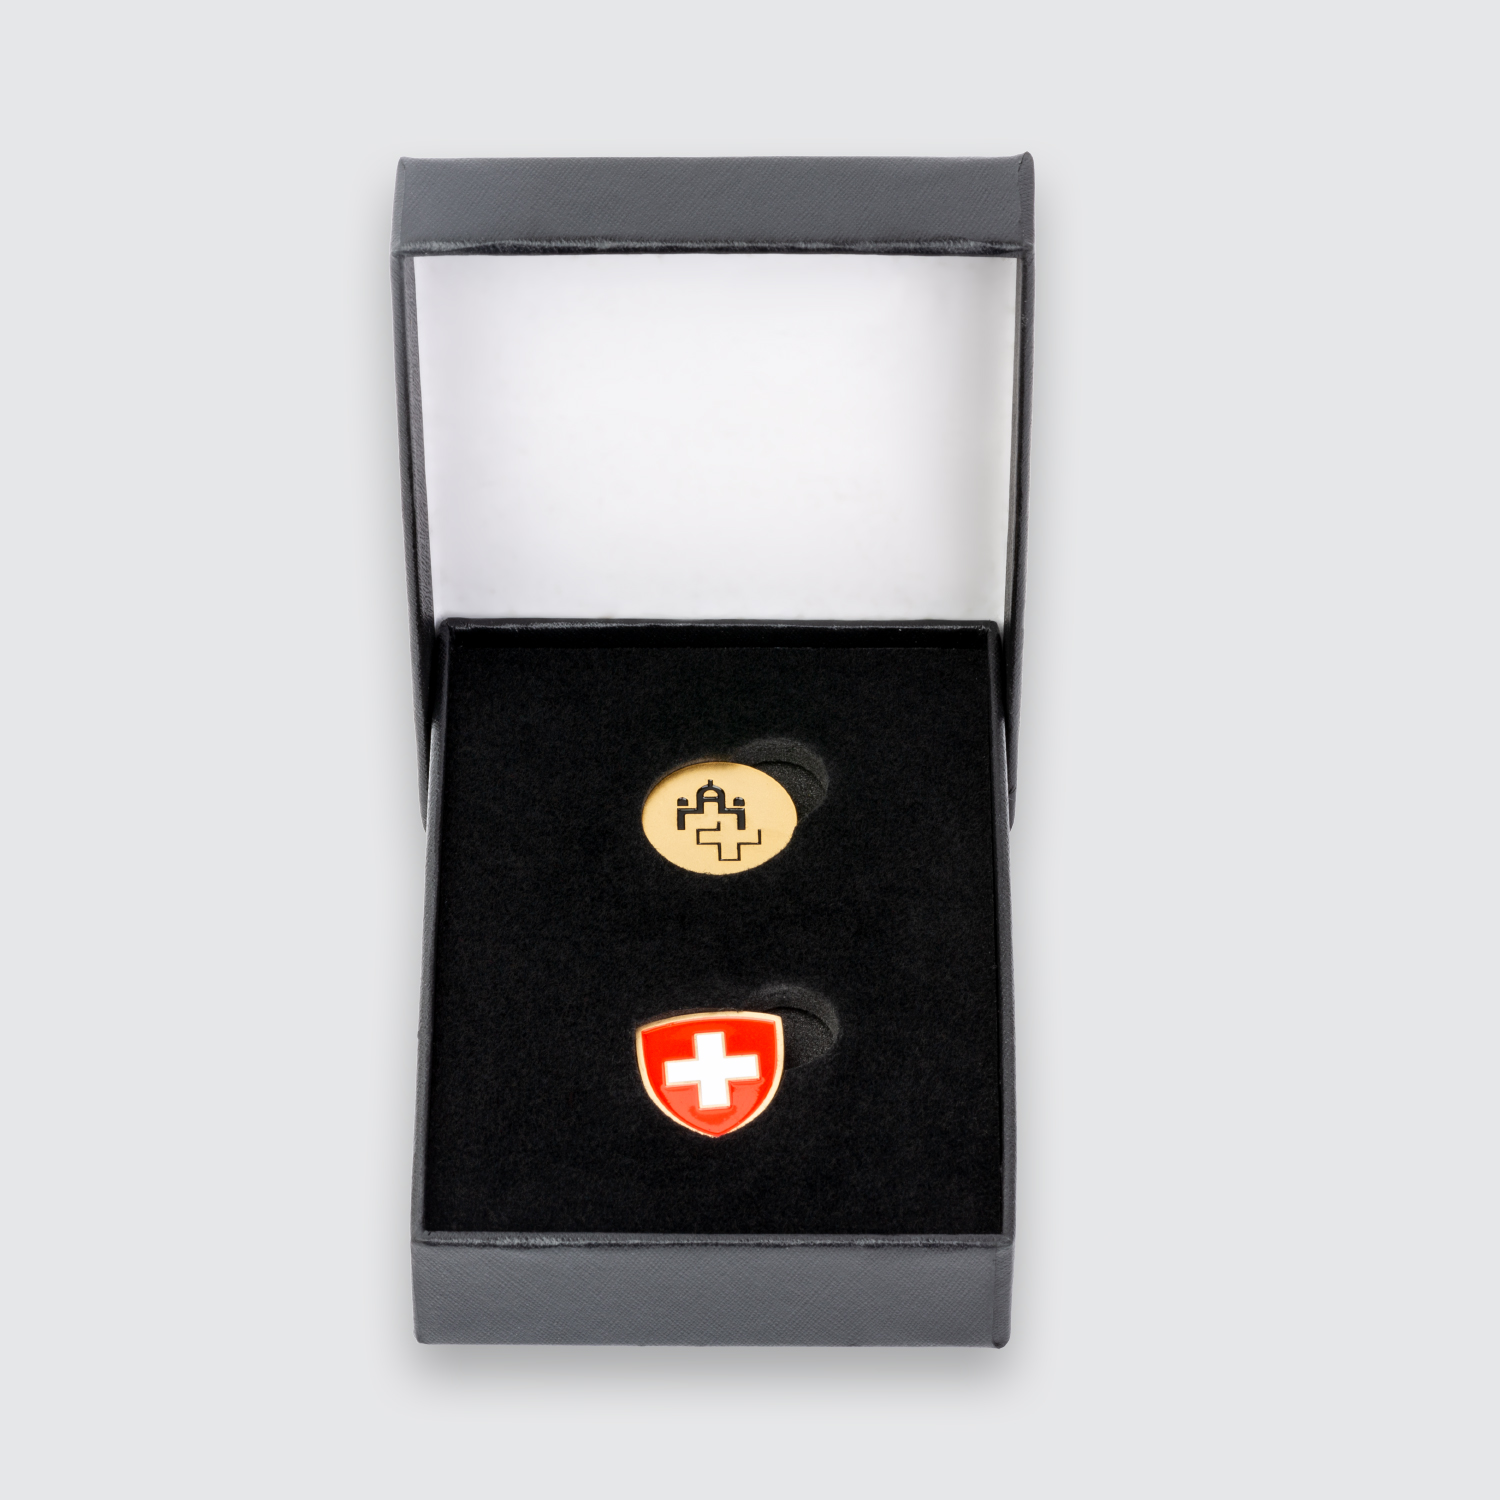 Schweiz Wappen Schild Konturen Pin Anstecker Anstecknadel Badge Button 